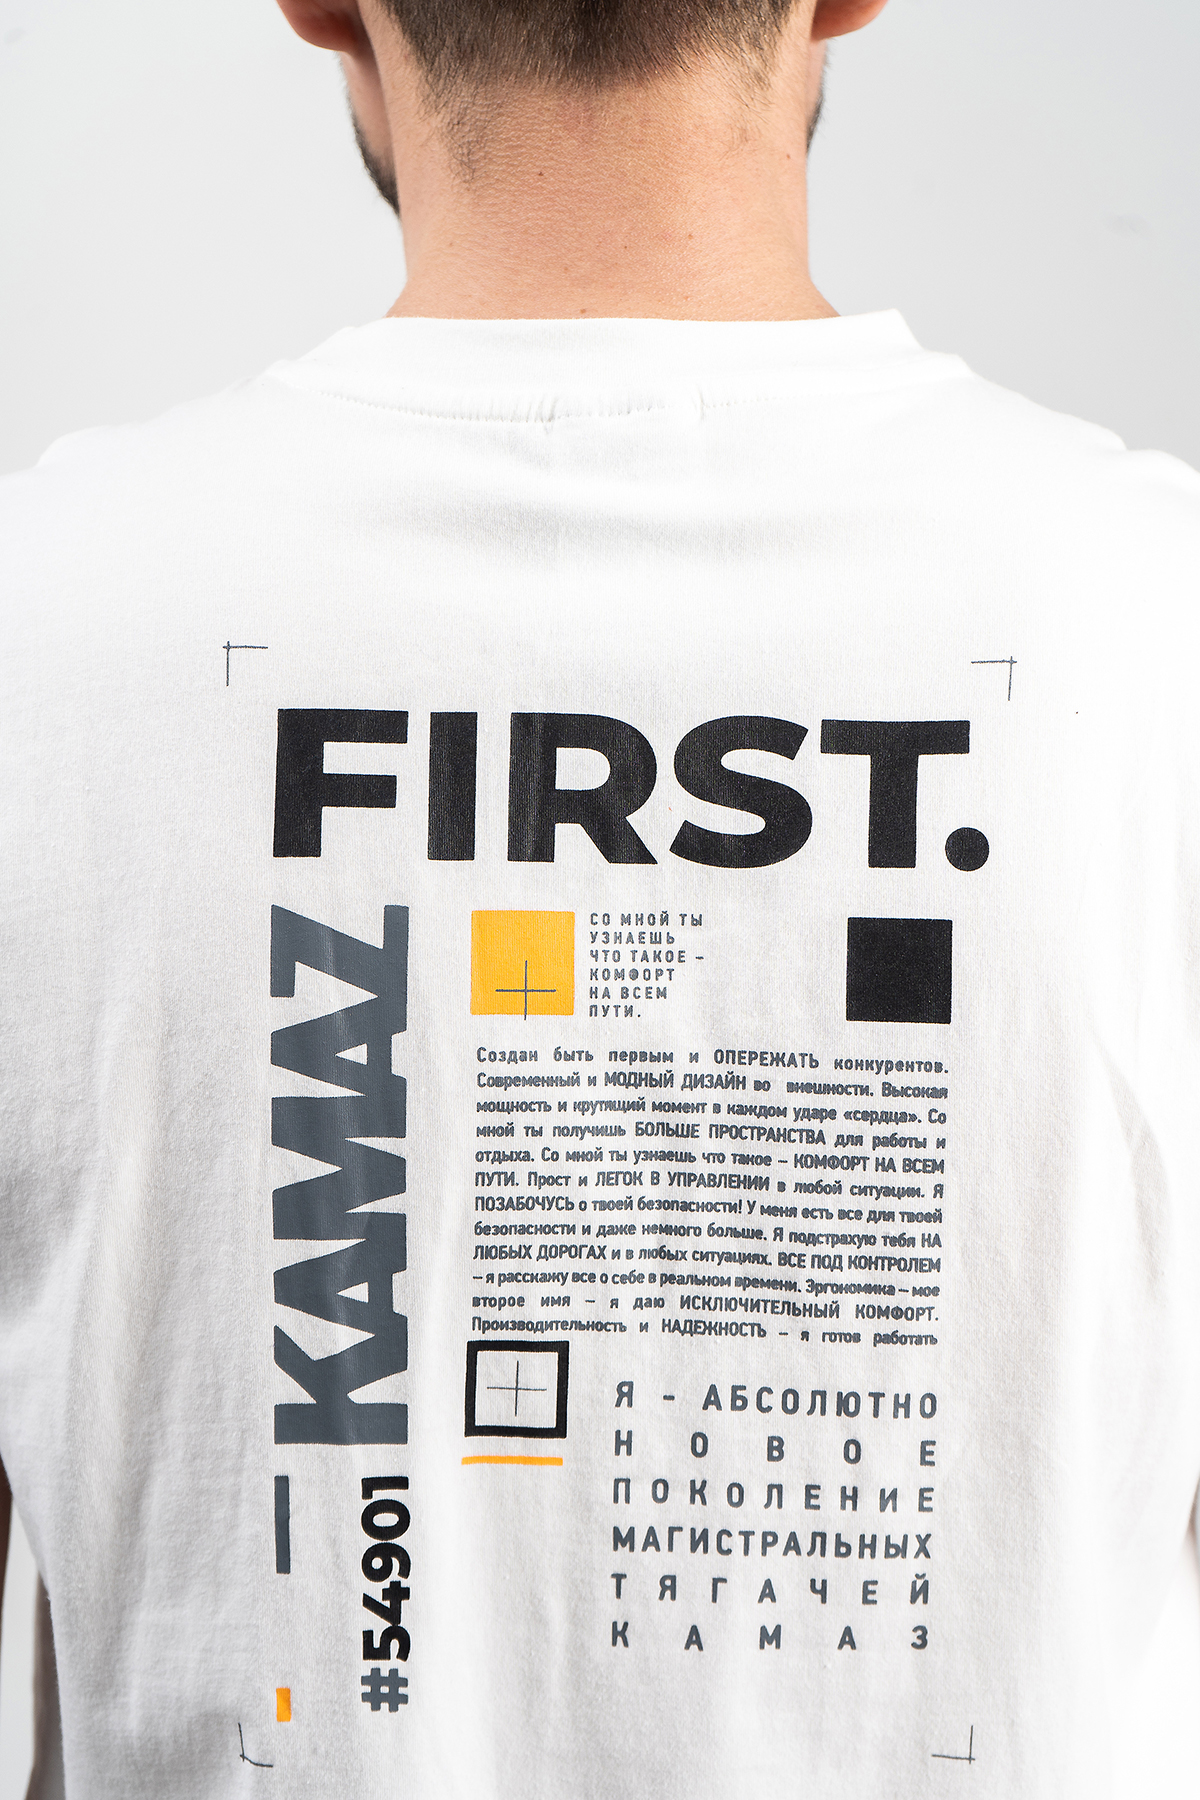 футболка first kamaz 54901 белая